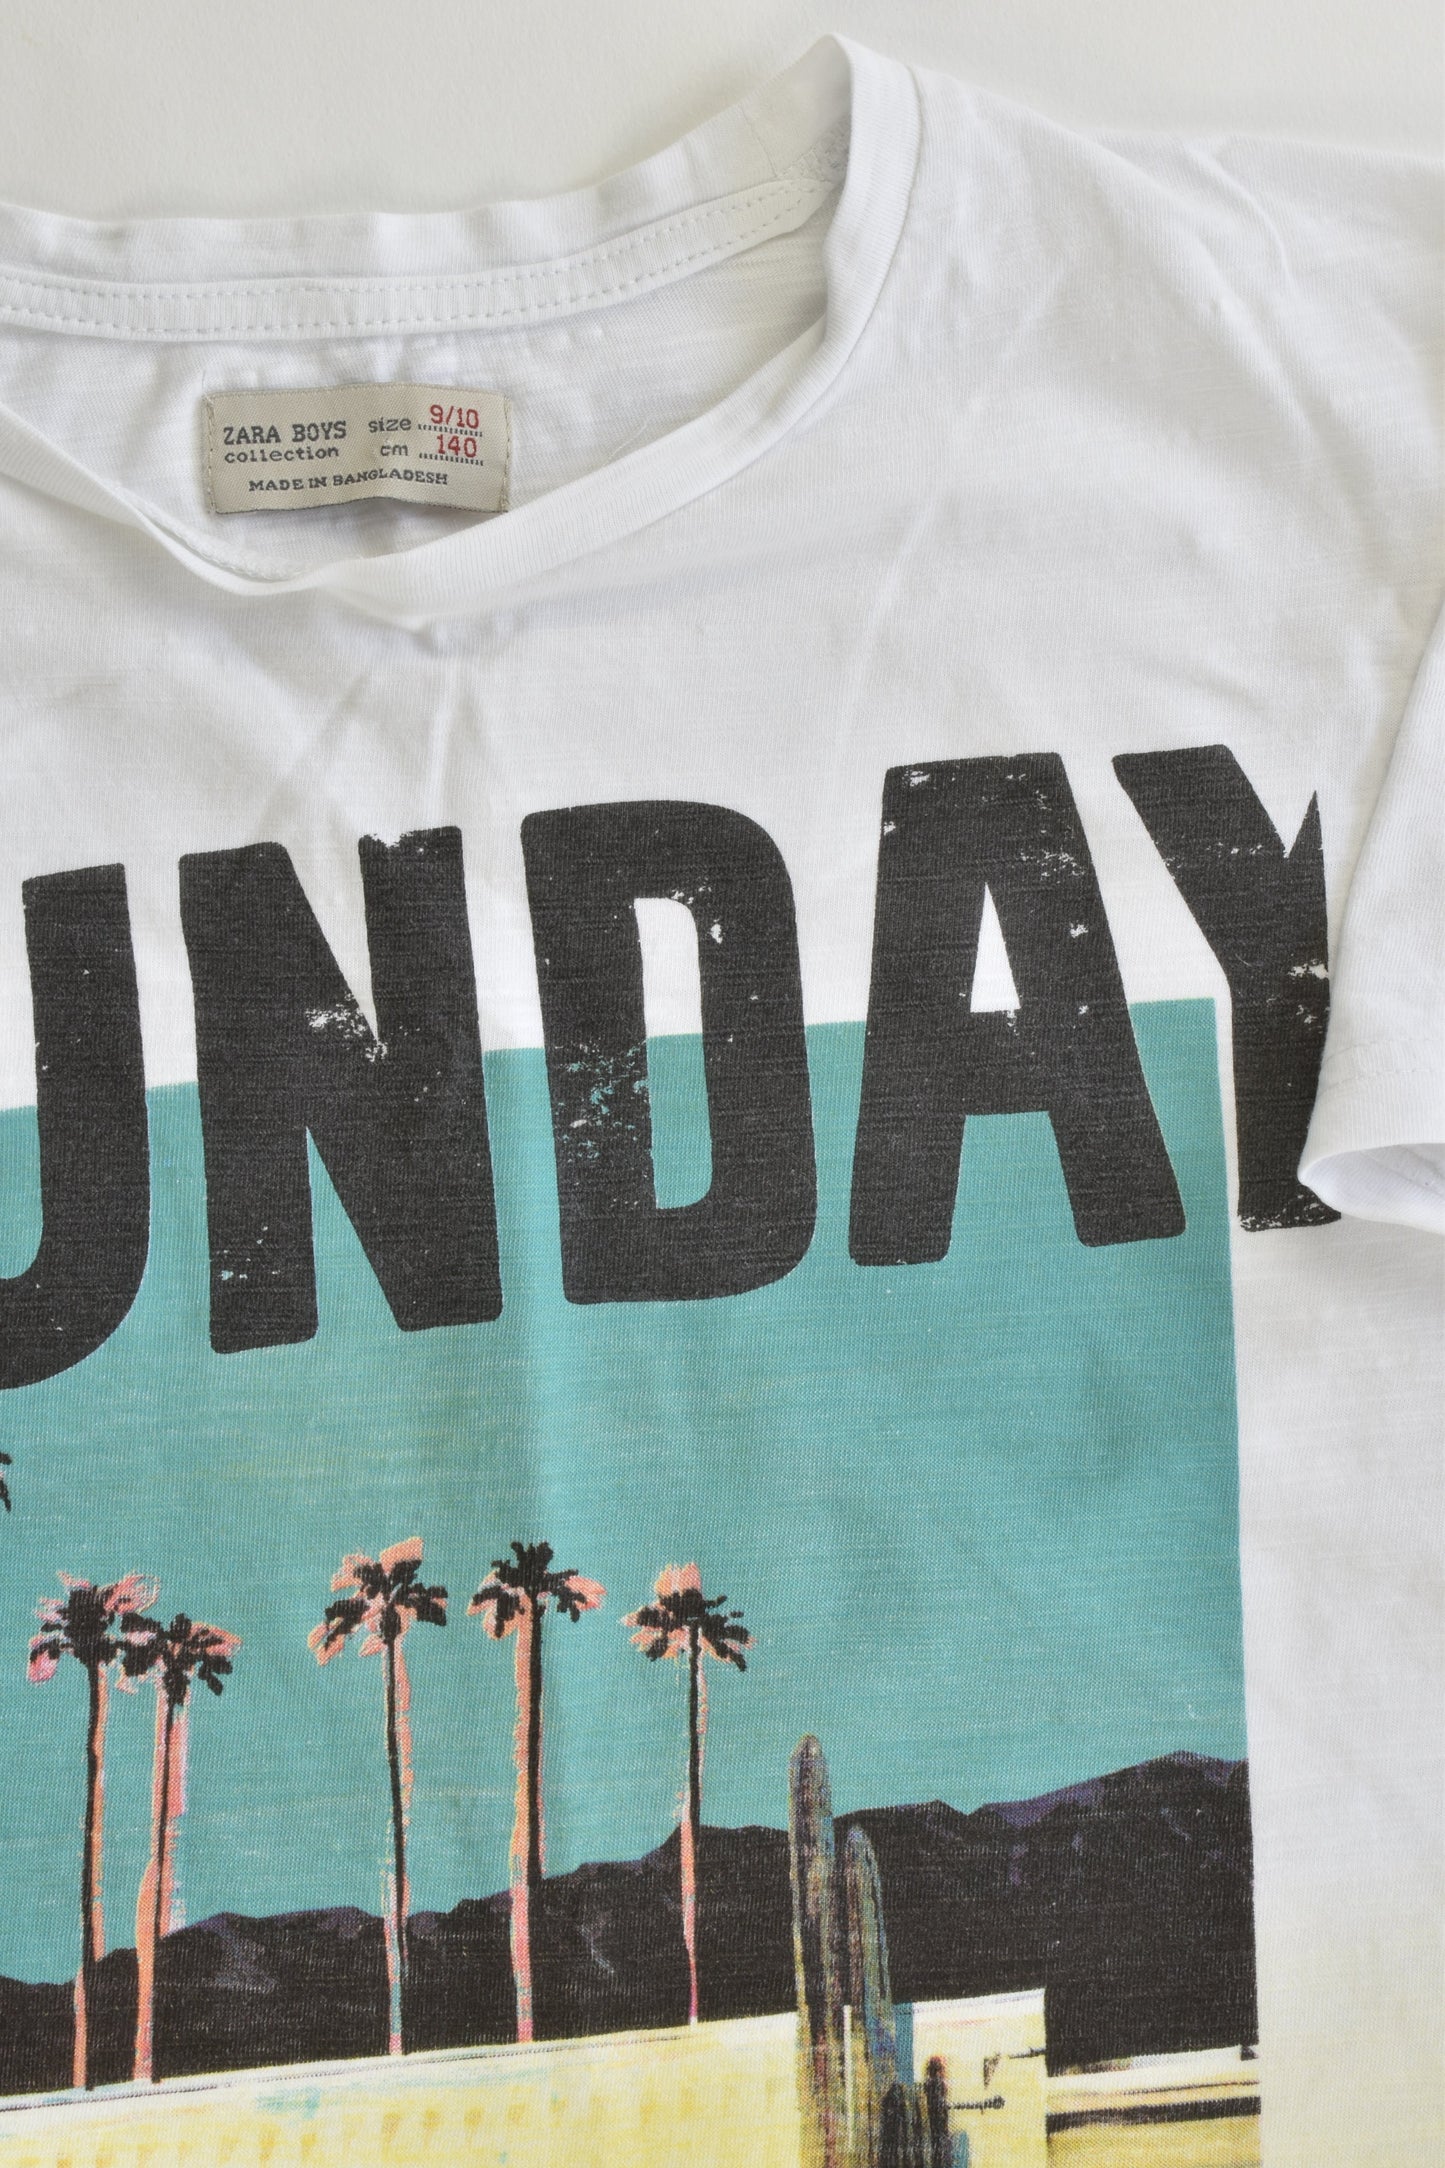 Zara Boys Size 9/19 (140 cm) "Sunday" T-shirt